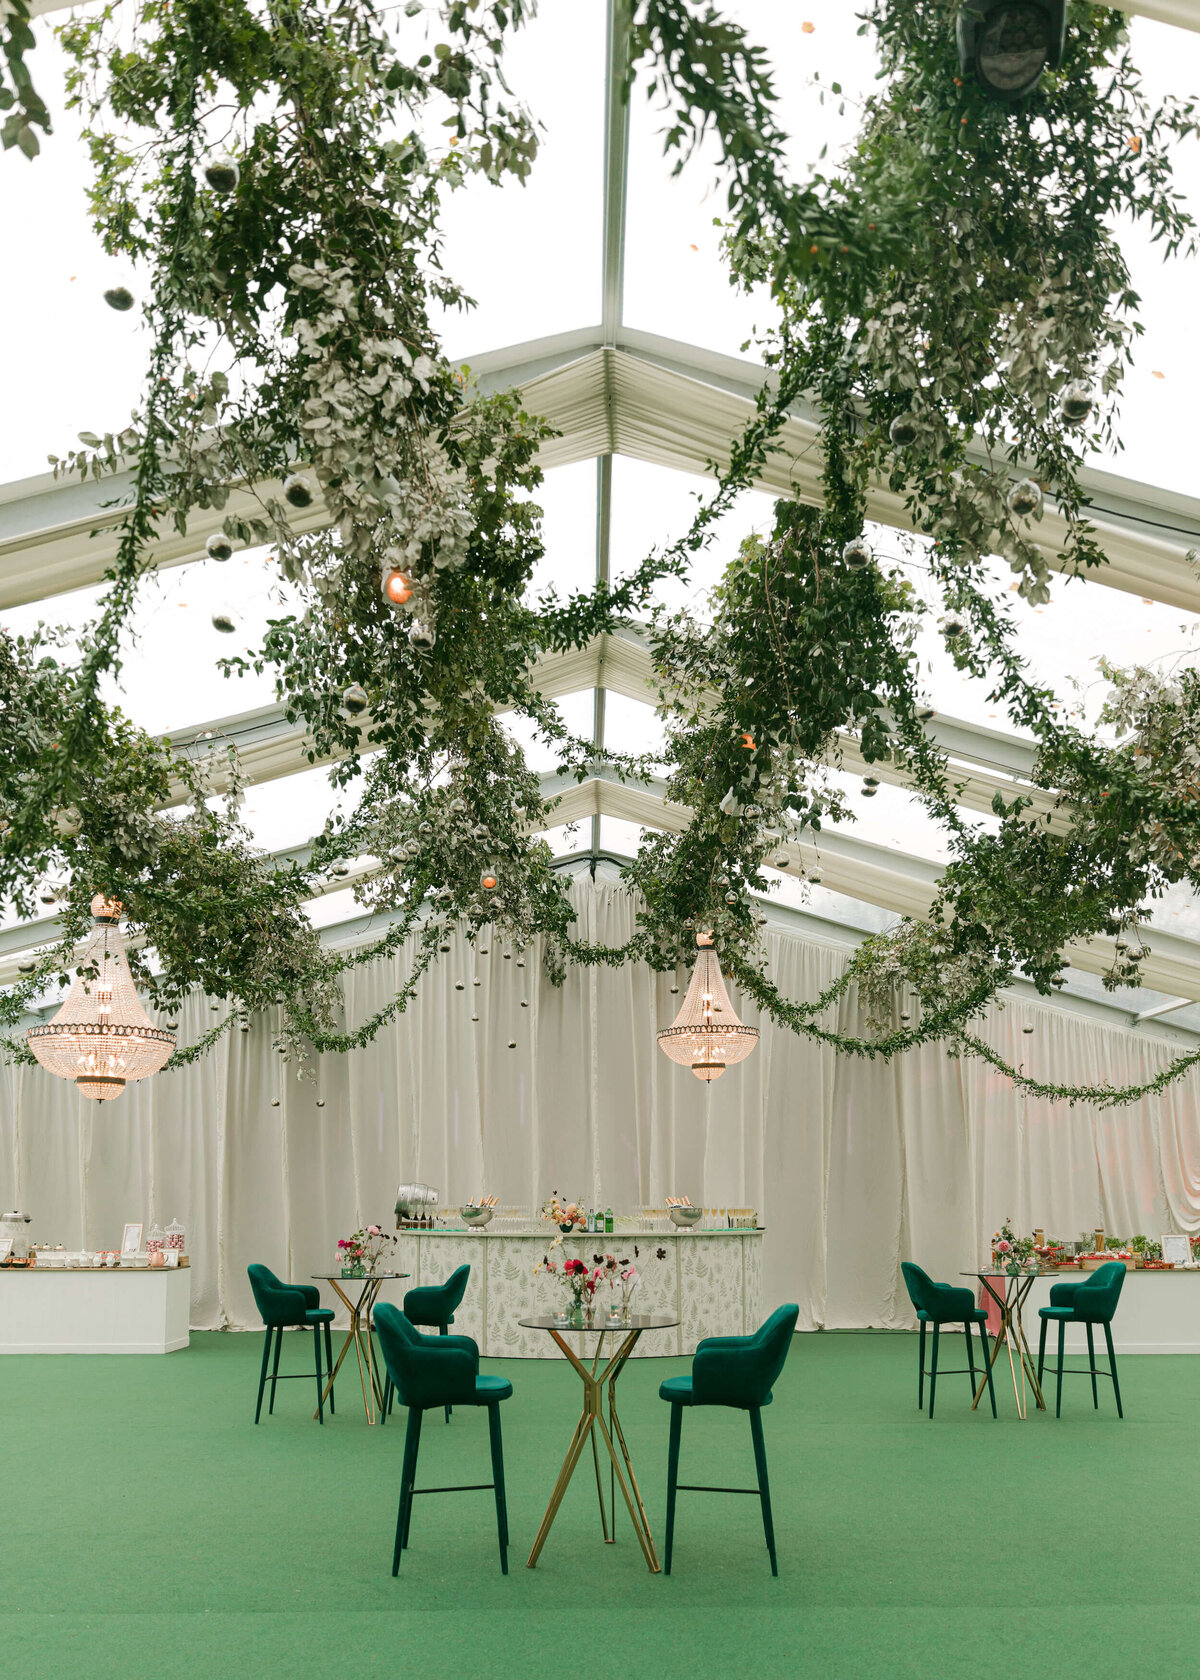 chloe-winstanley-wedding-oxford-gsp-reception-tent